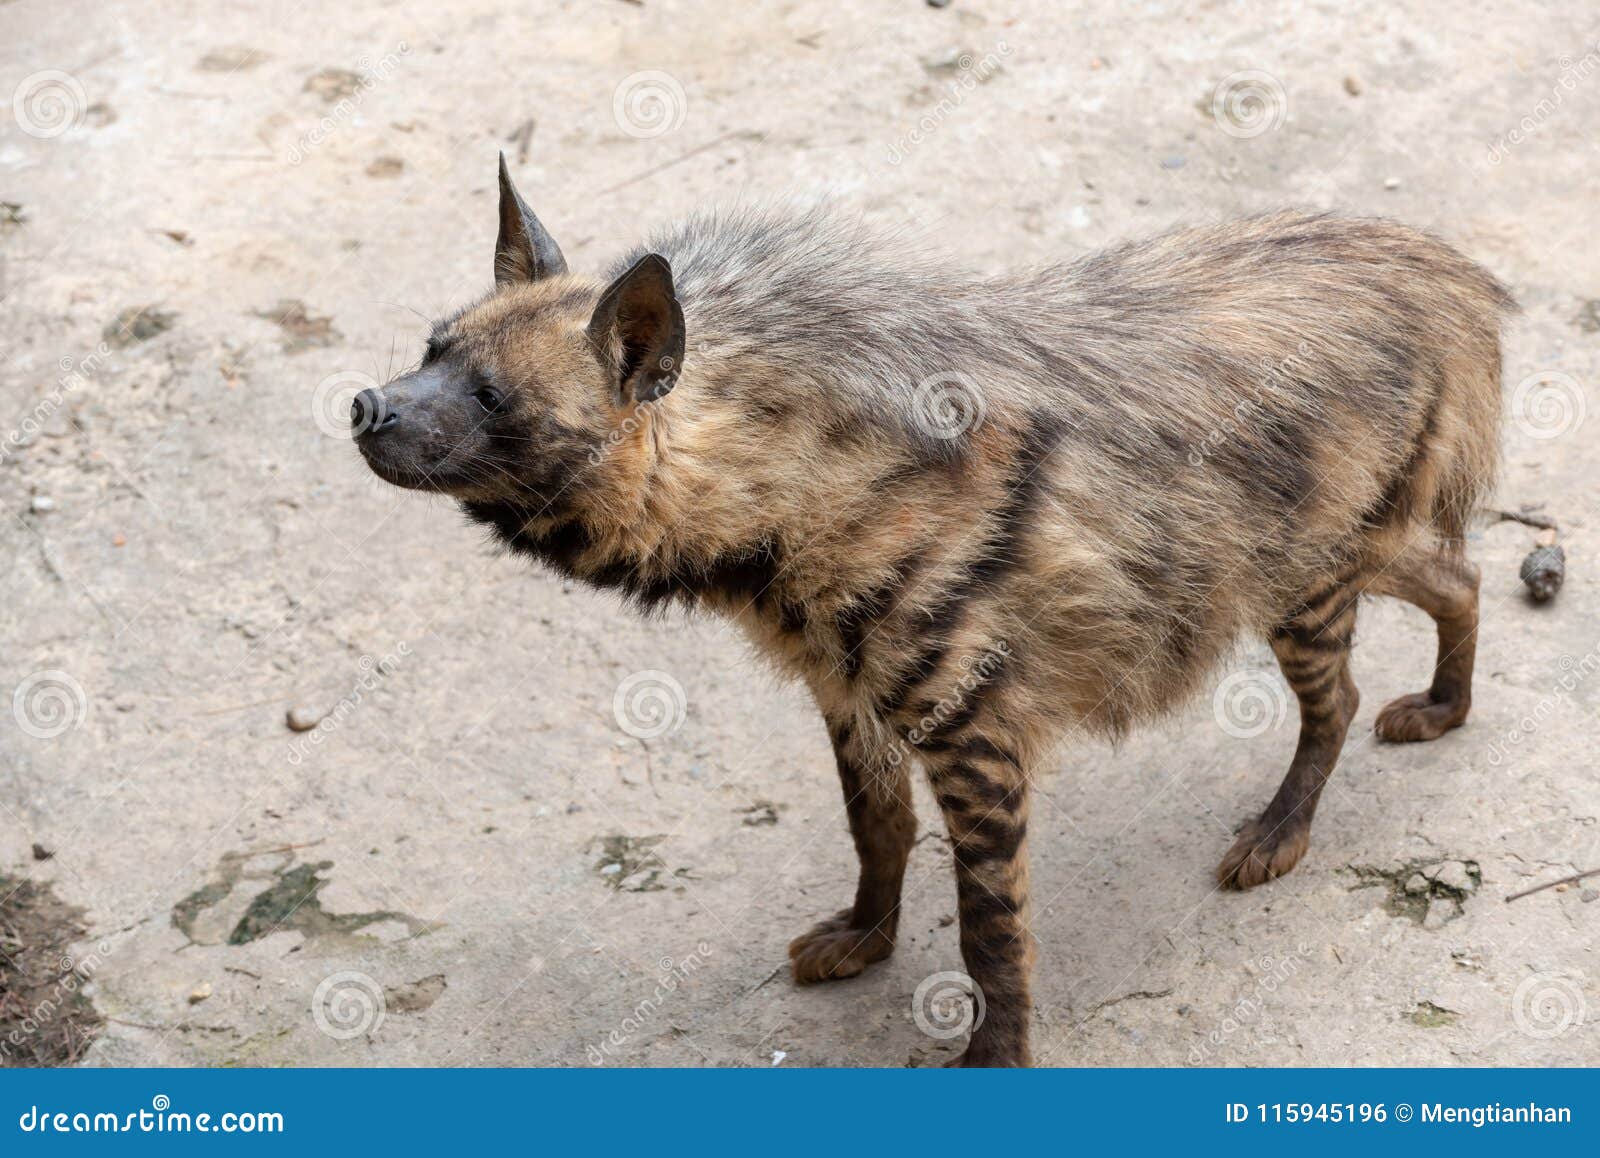 striped hyaena